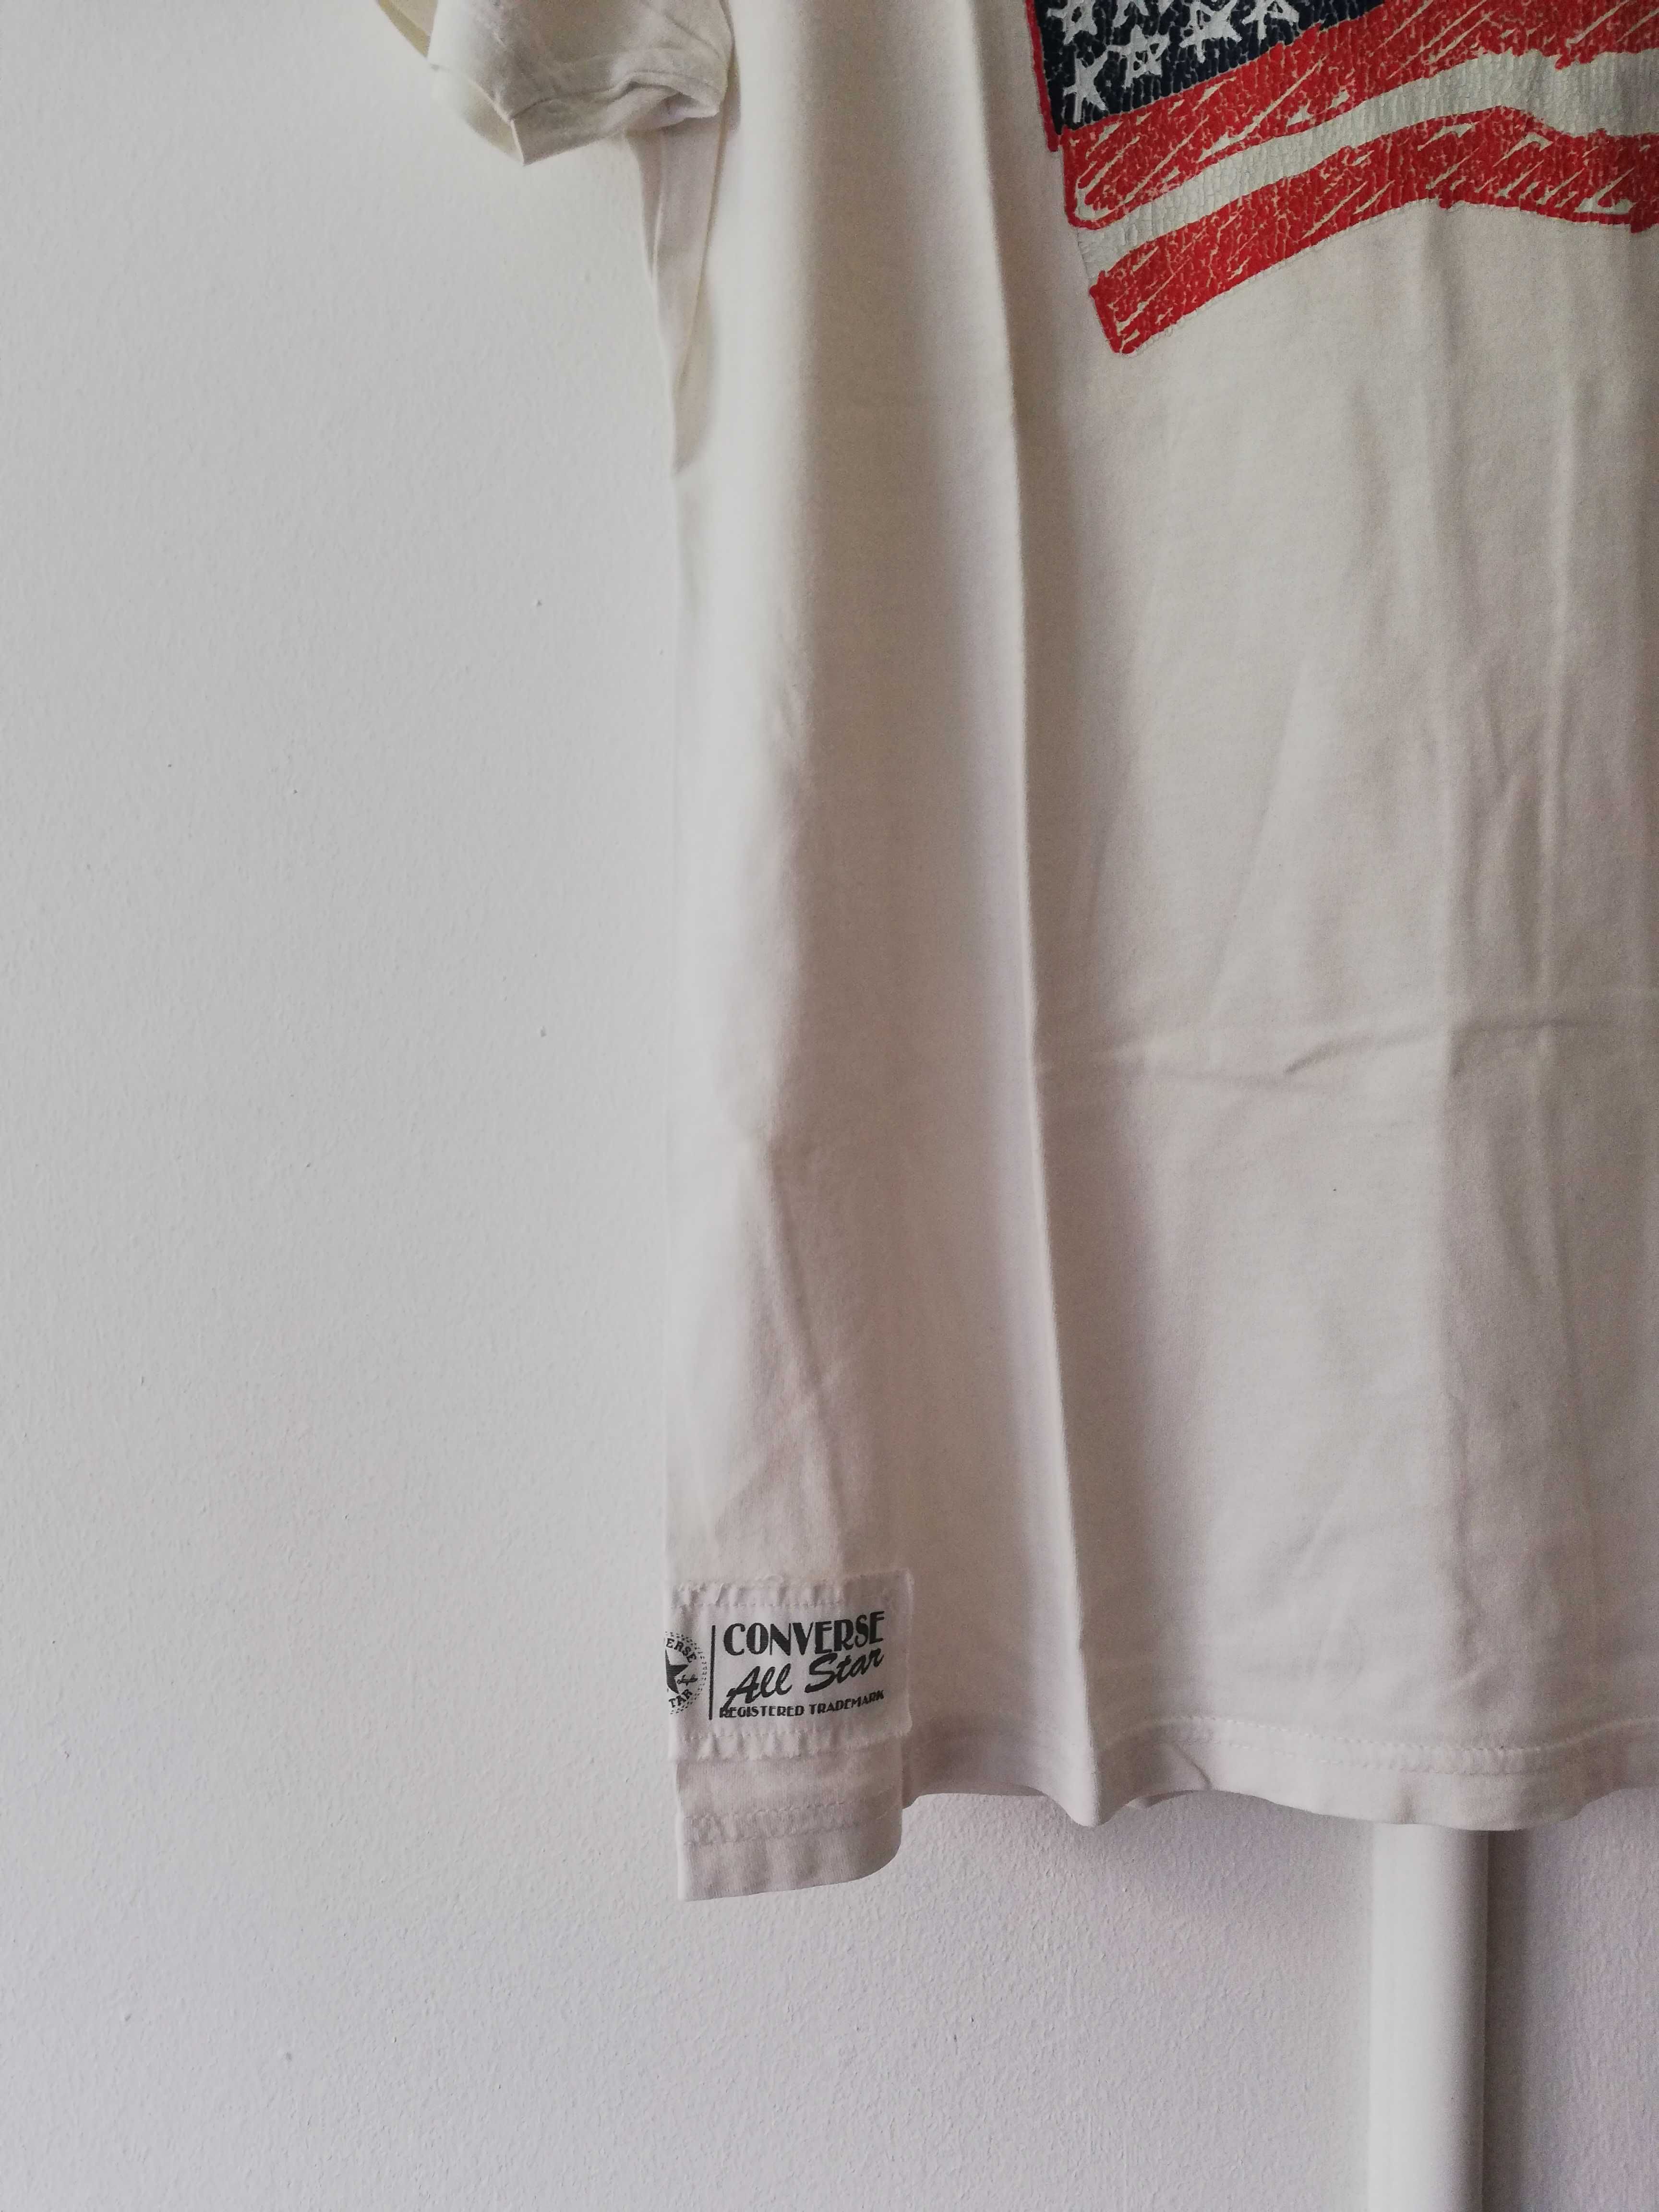 T-shirt branca com bandeira converse